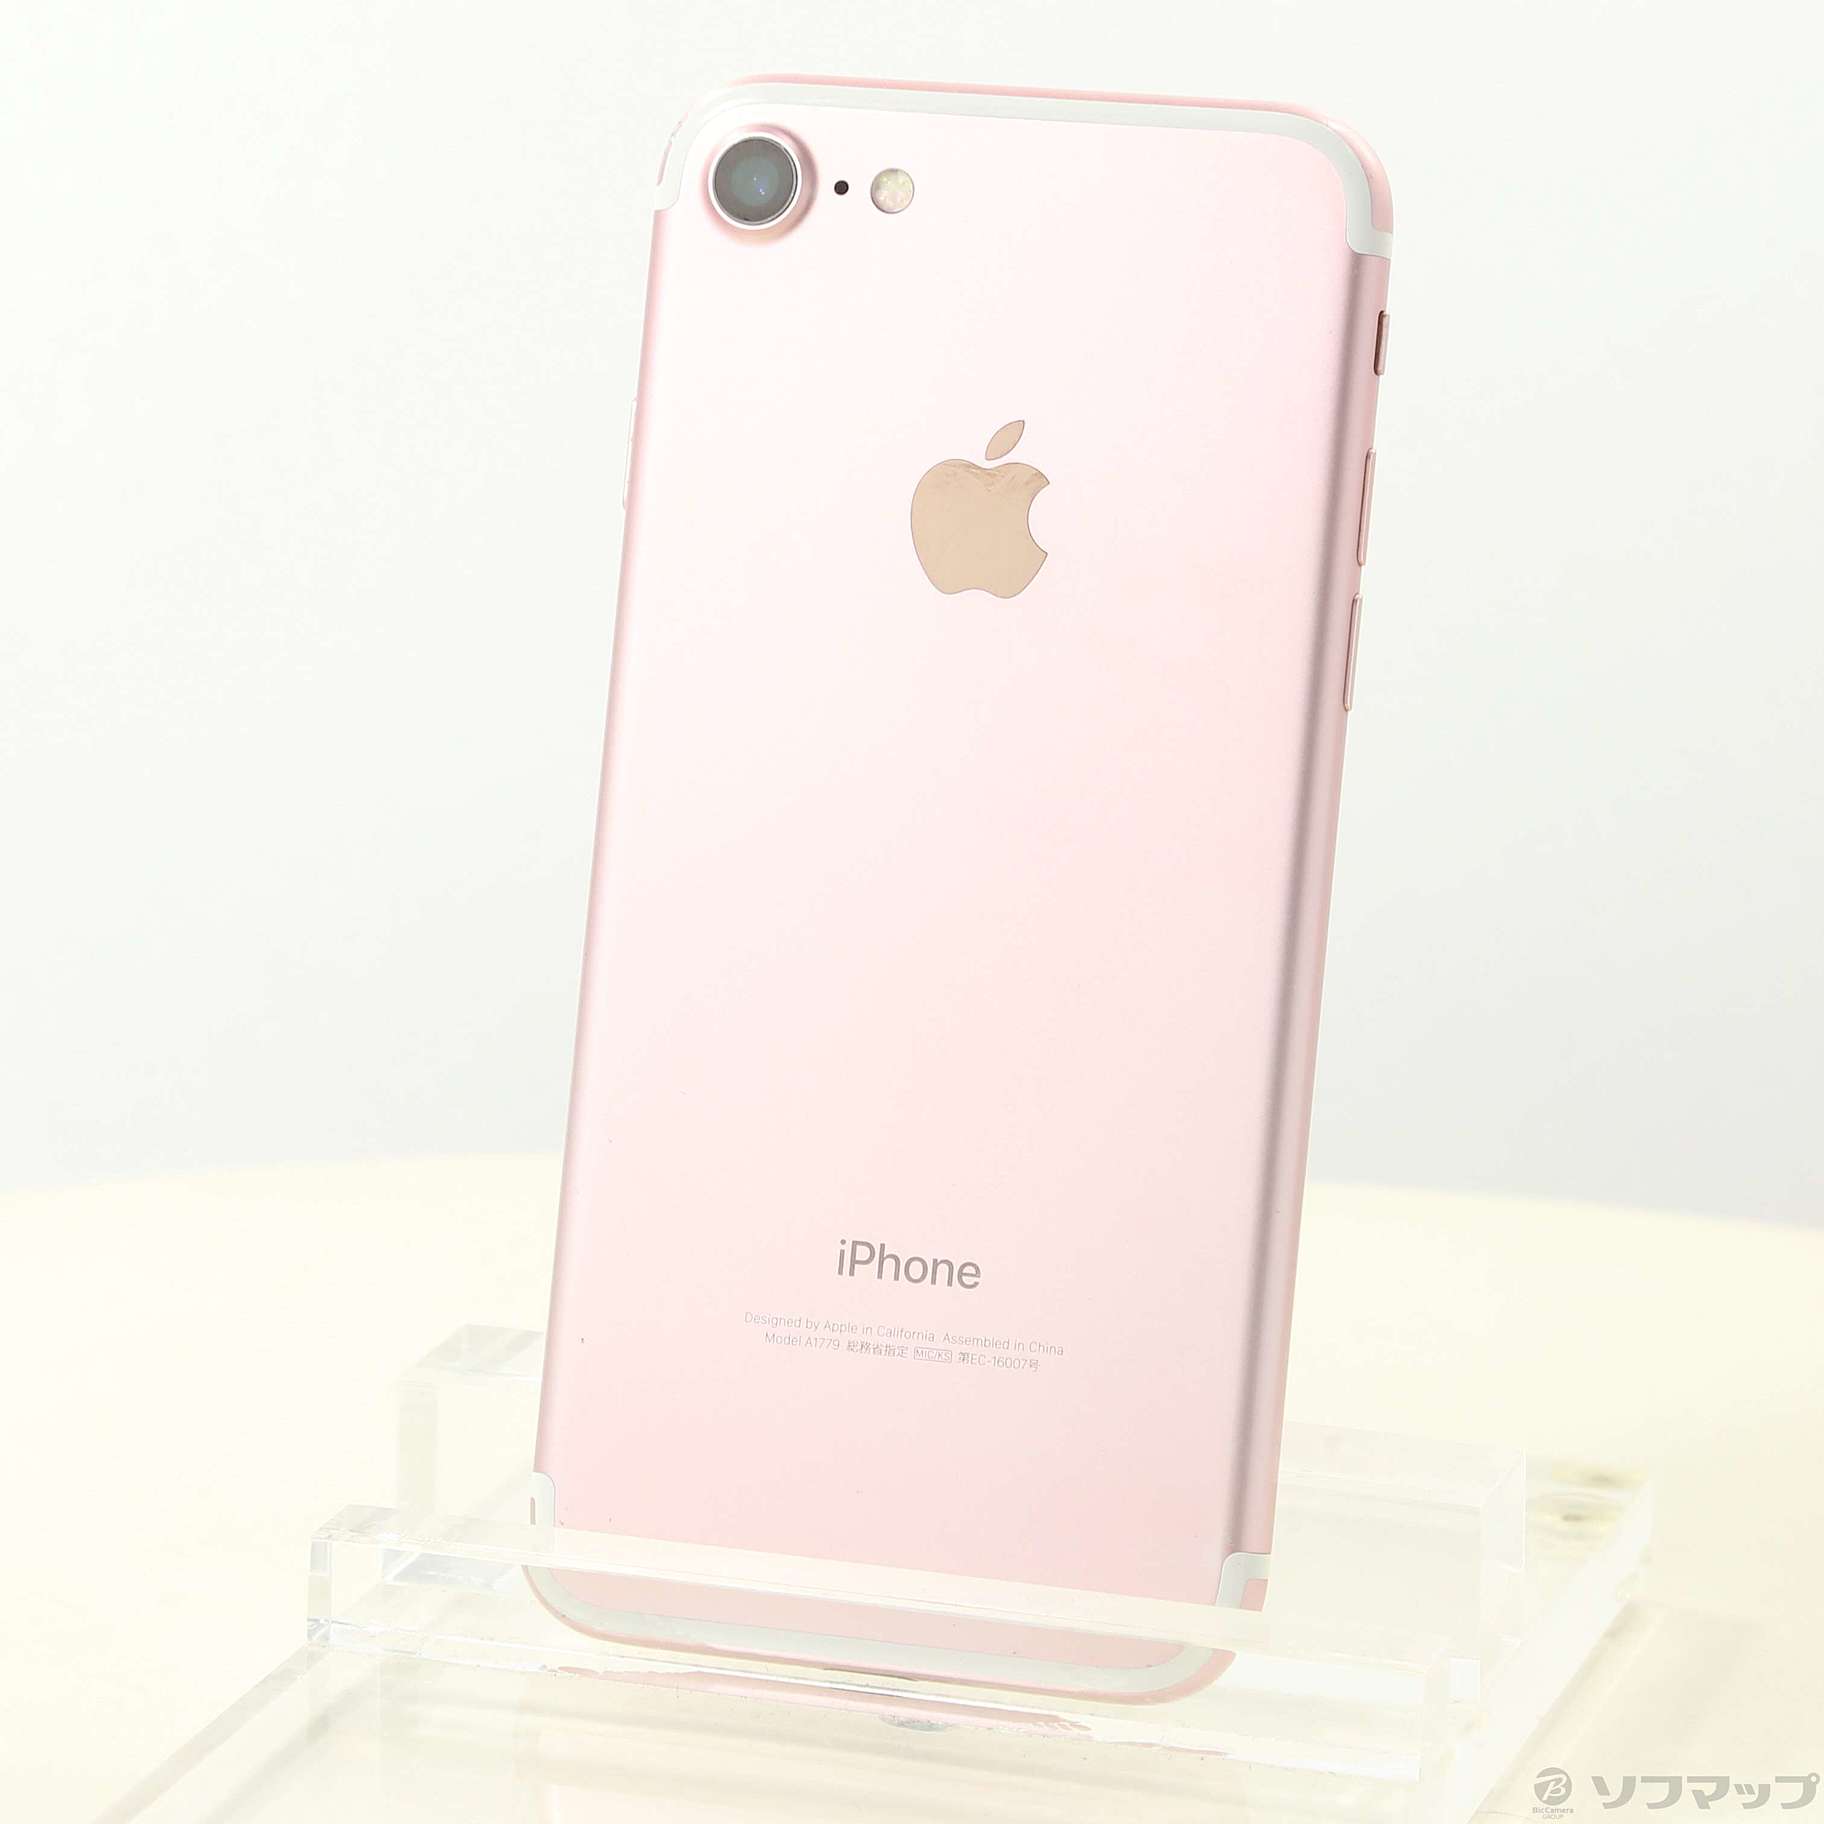 iPhone 7 Rose Gold 128 GB Softbank